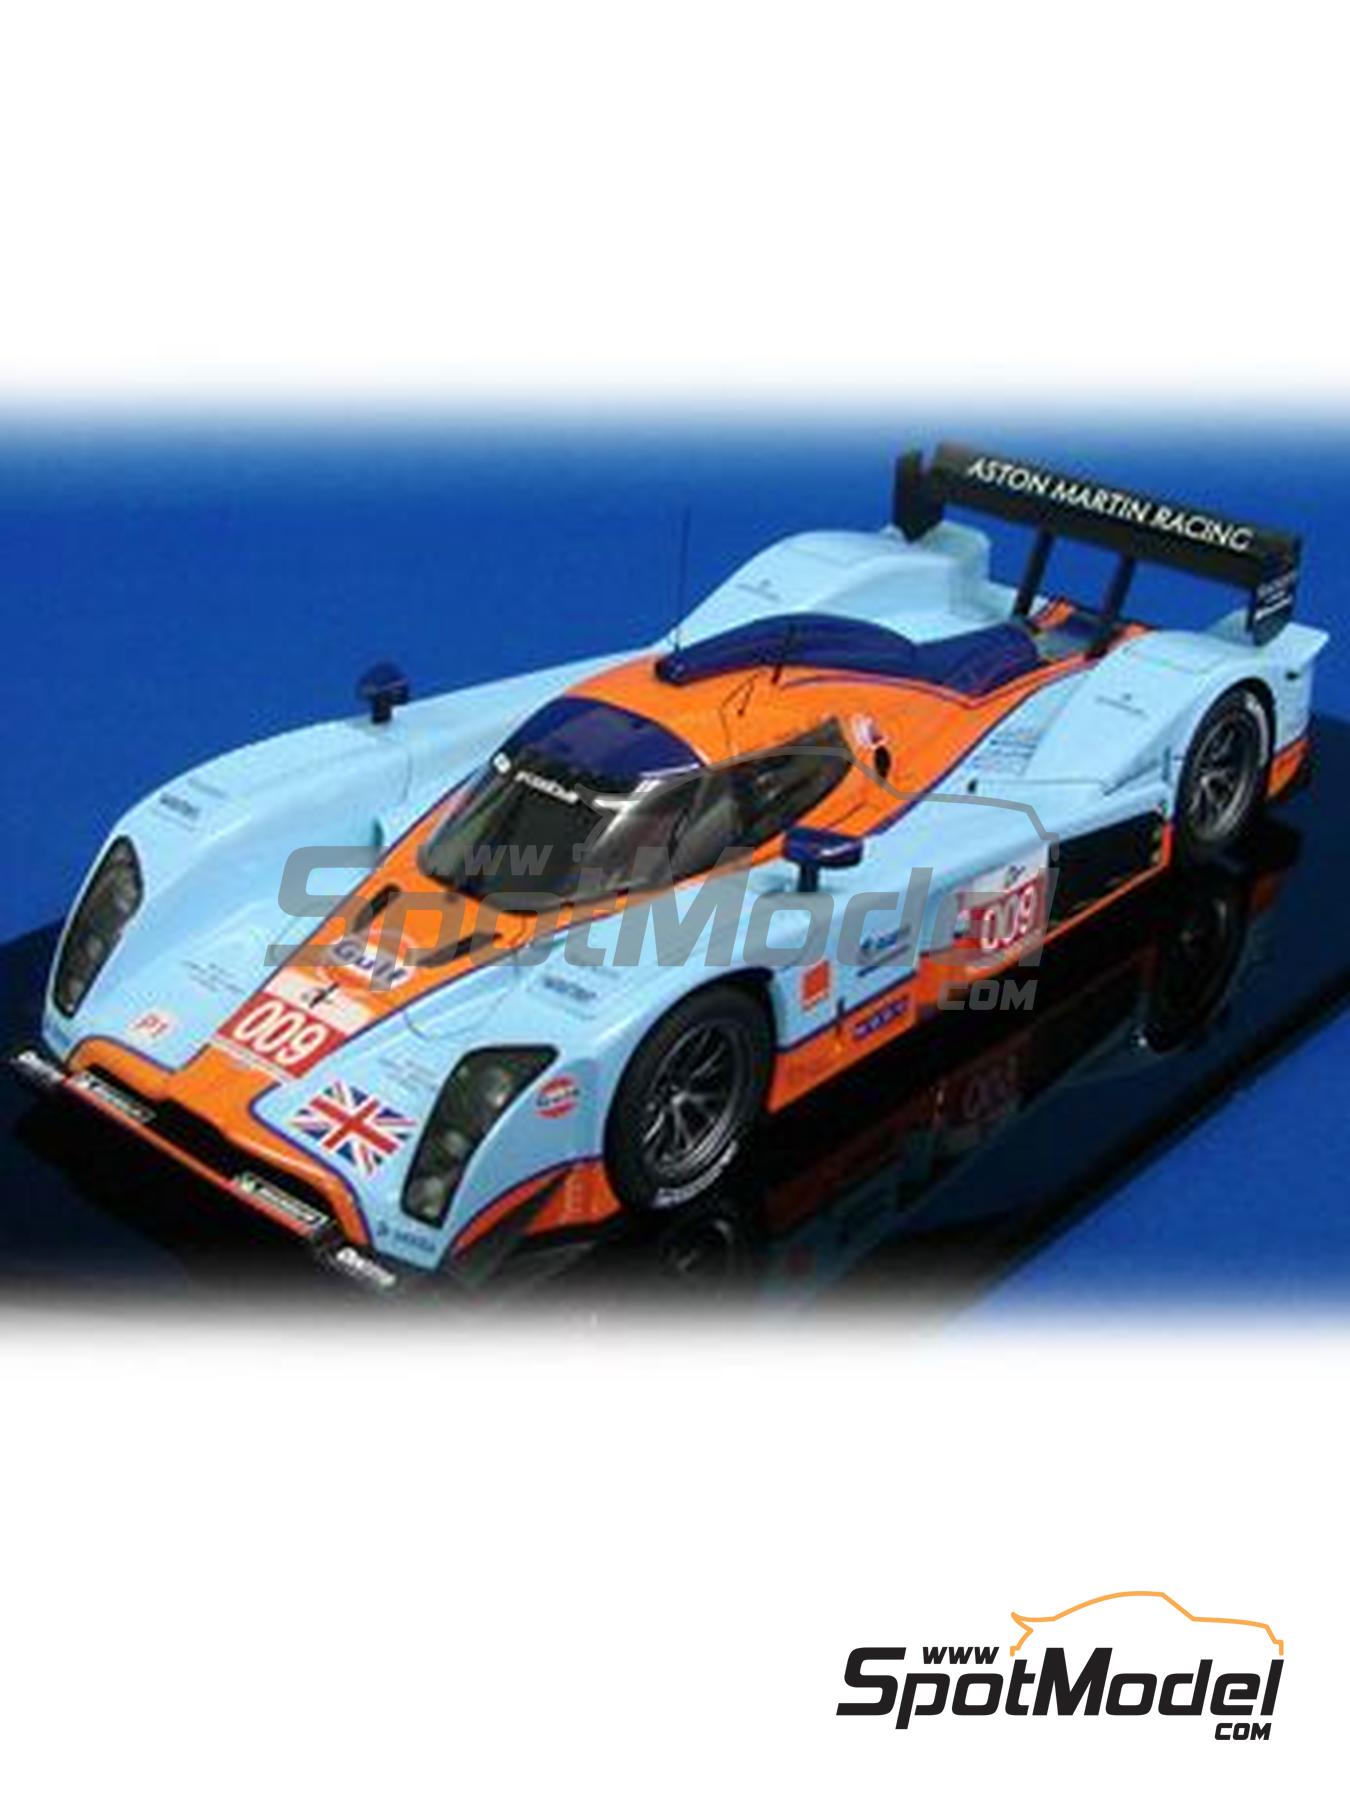 Studio27 FK2499 1:24 Lola-Aston Martin Le Mans 2009 resin kit 